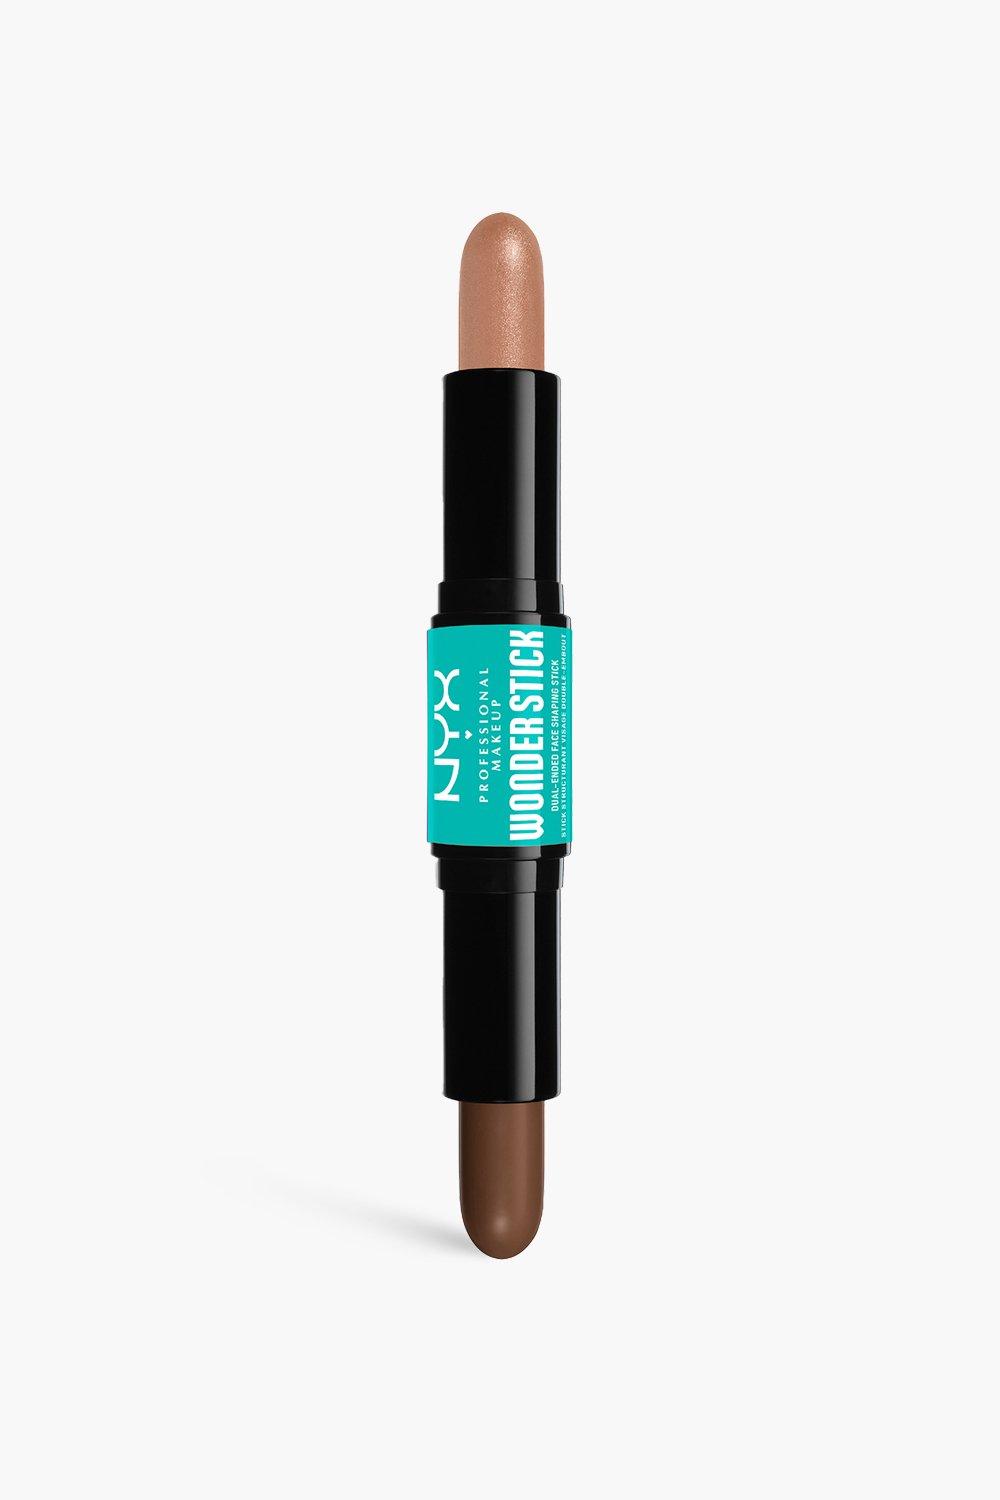 Nyx Professional Makeup Wonder Stick Highlight & Contour Stick, Medium